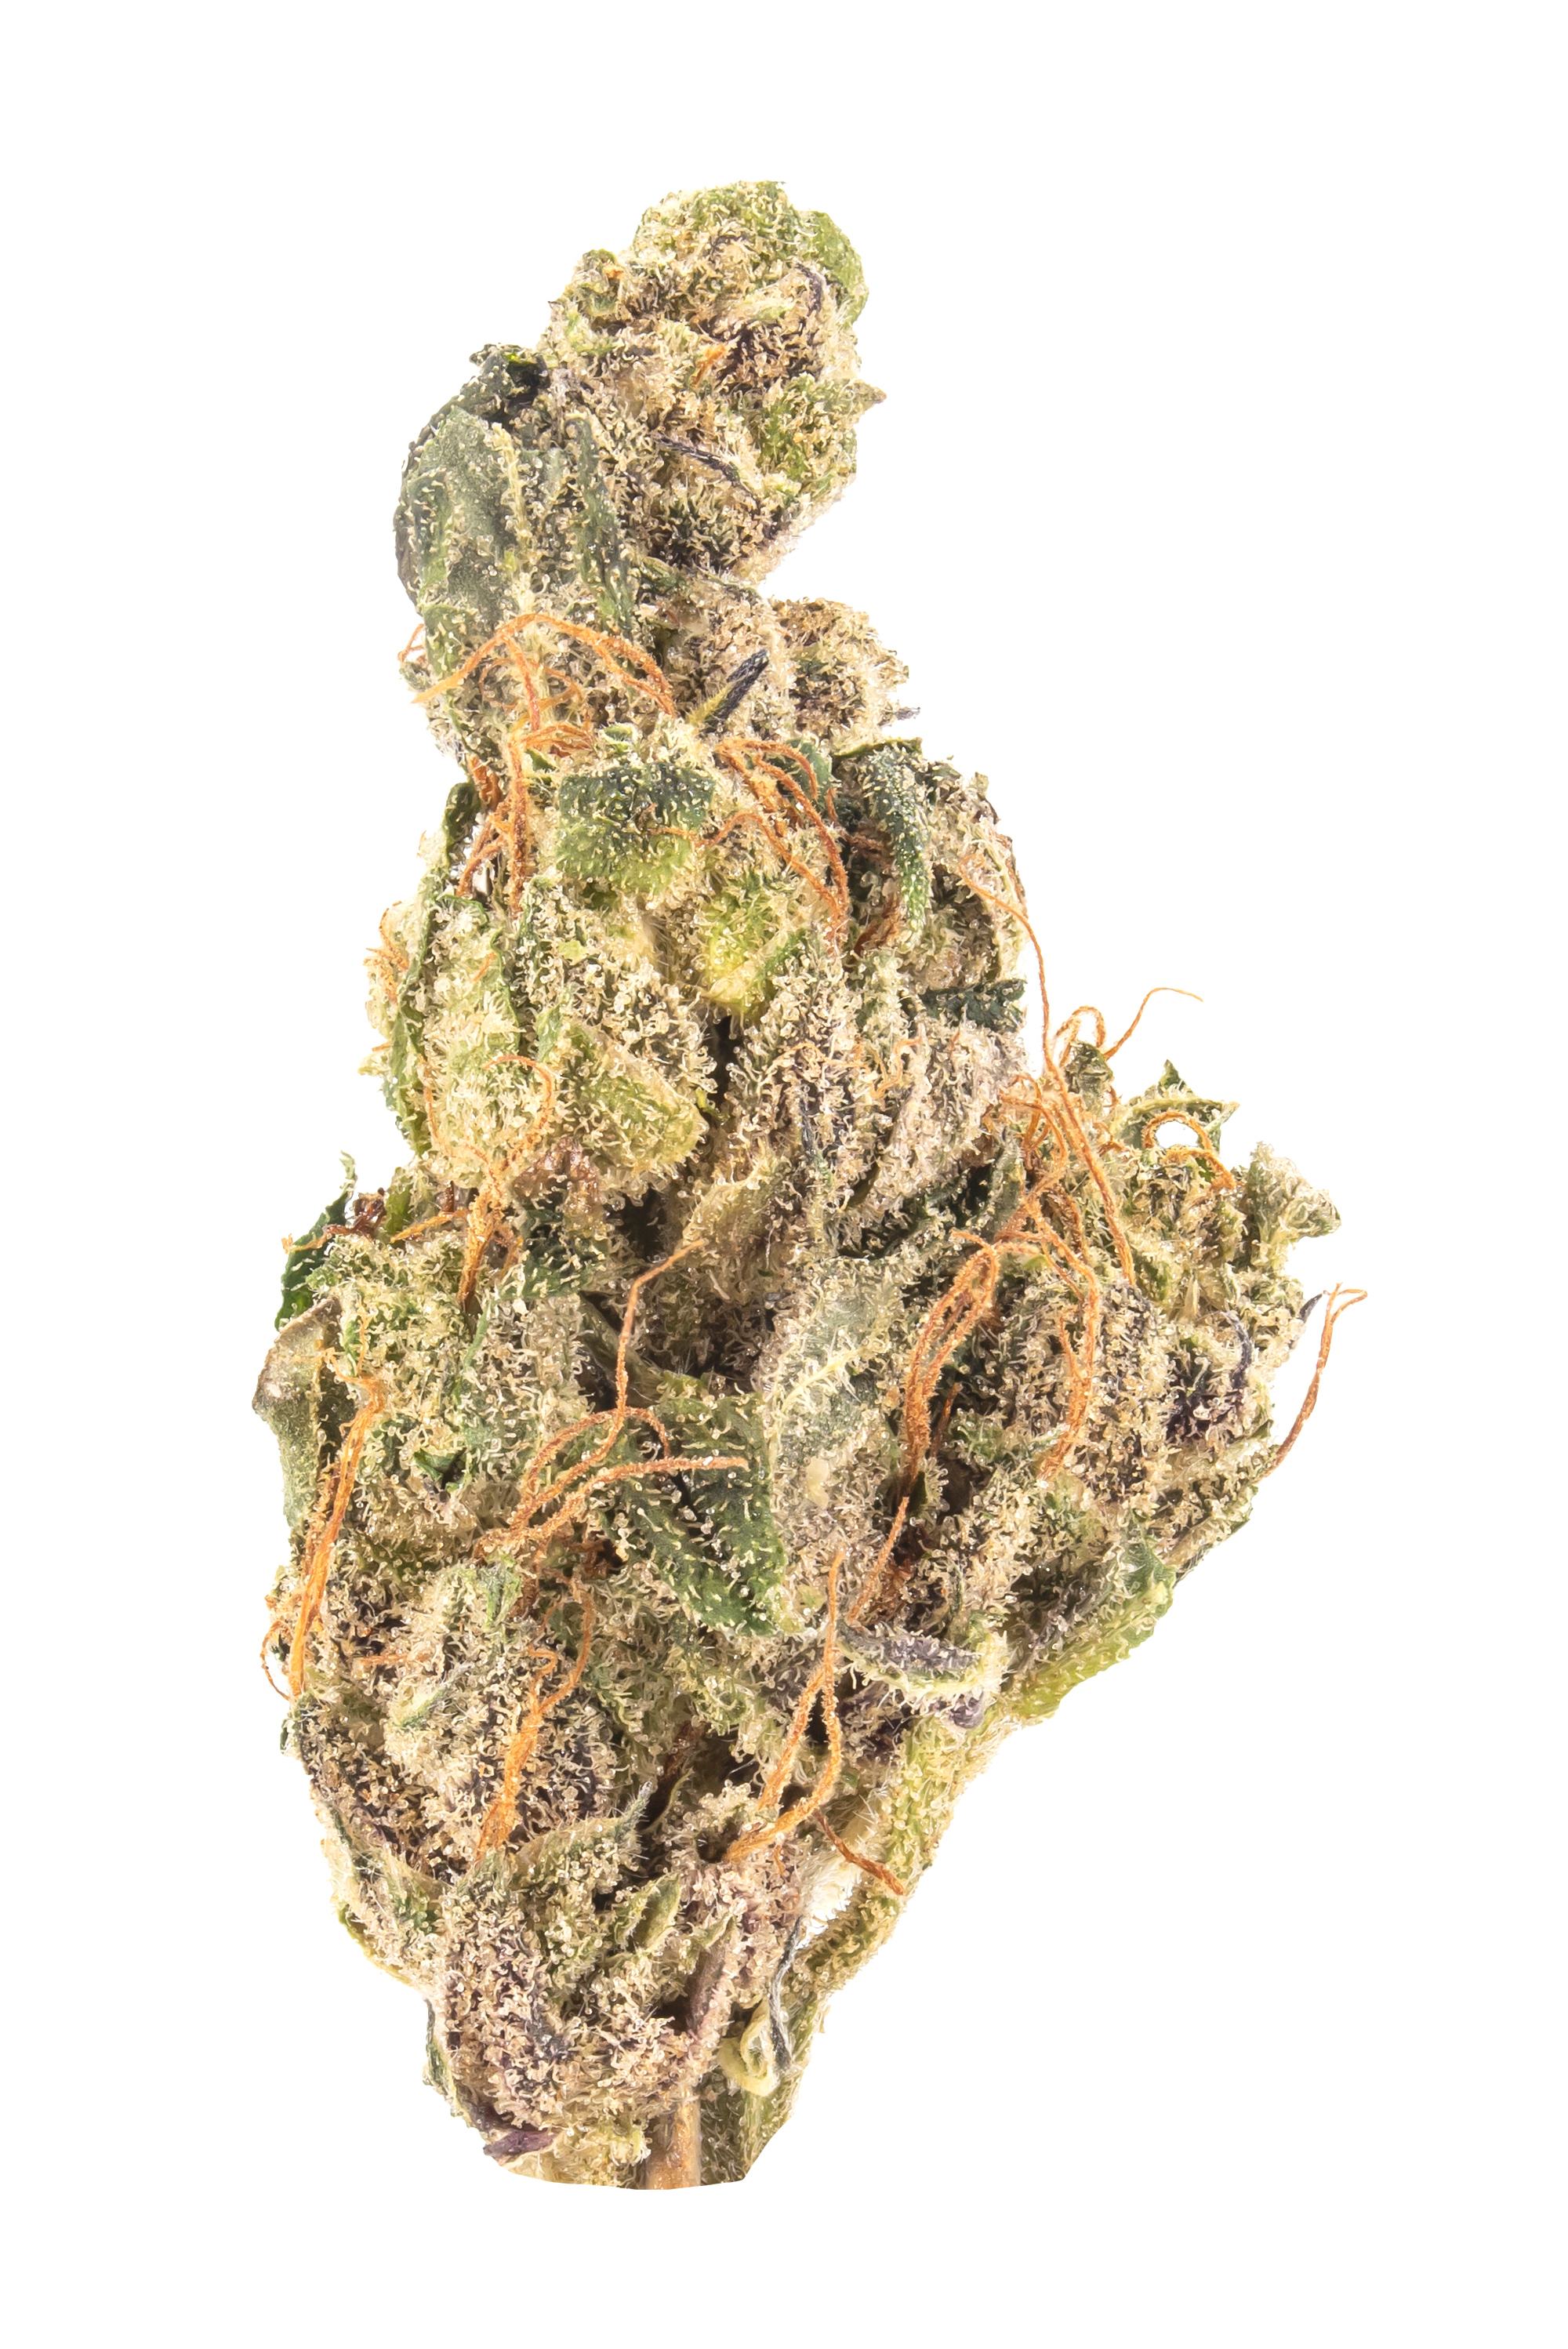 Super Purple Kush - Indica Cannabis Strain